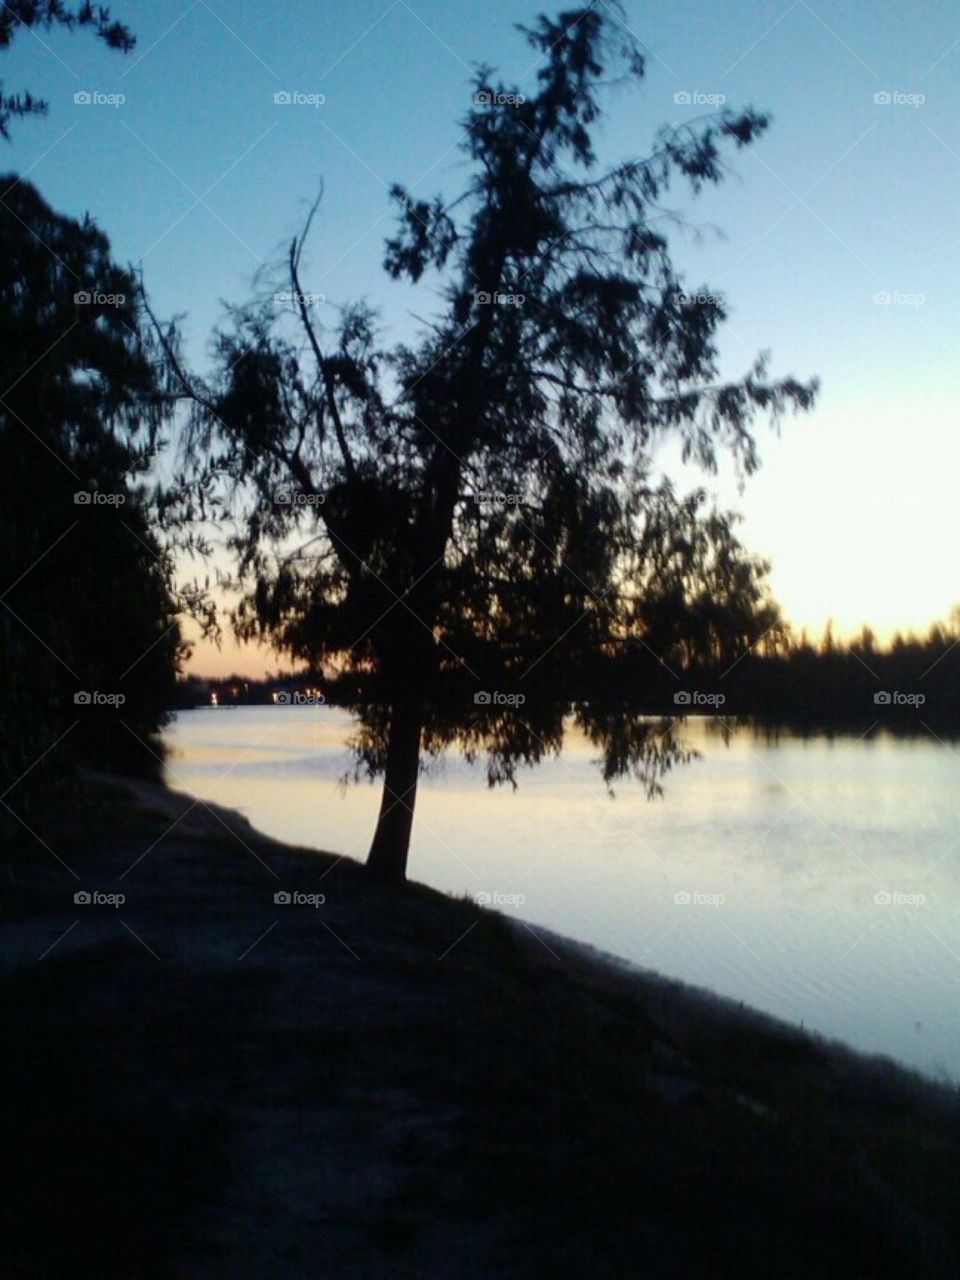 River nights